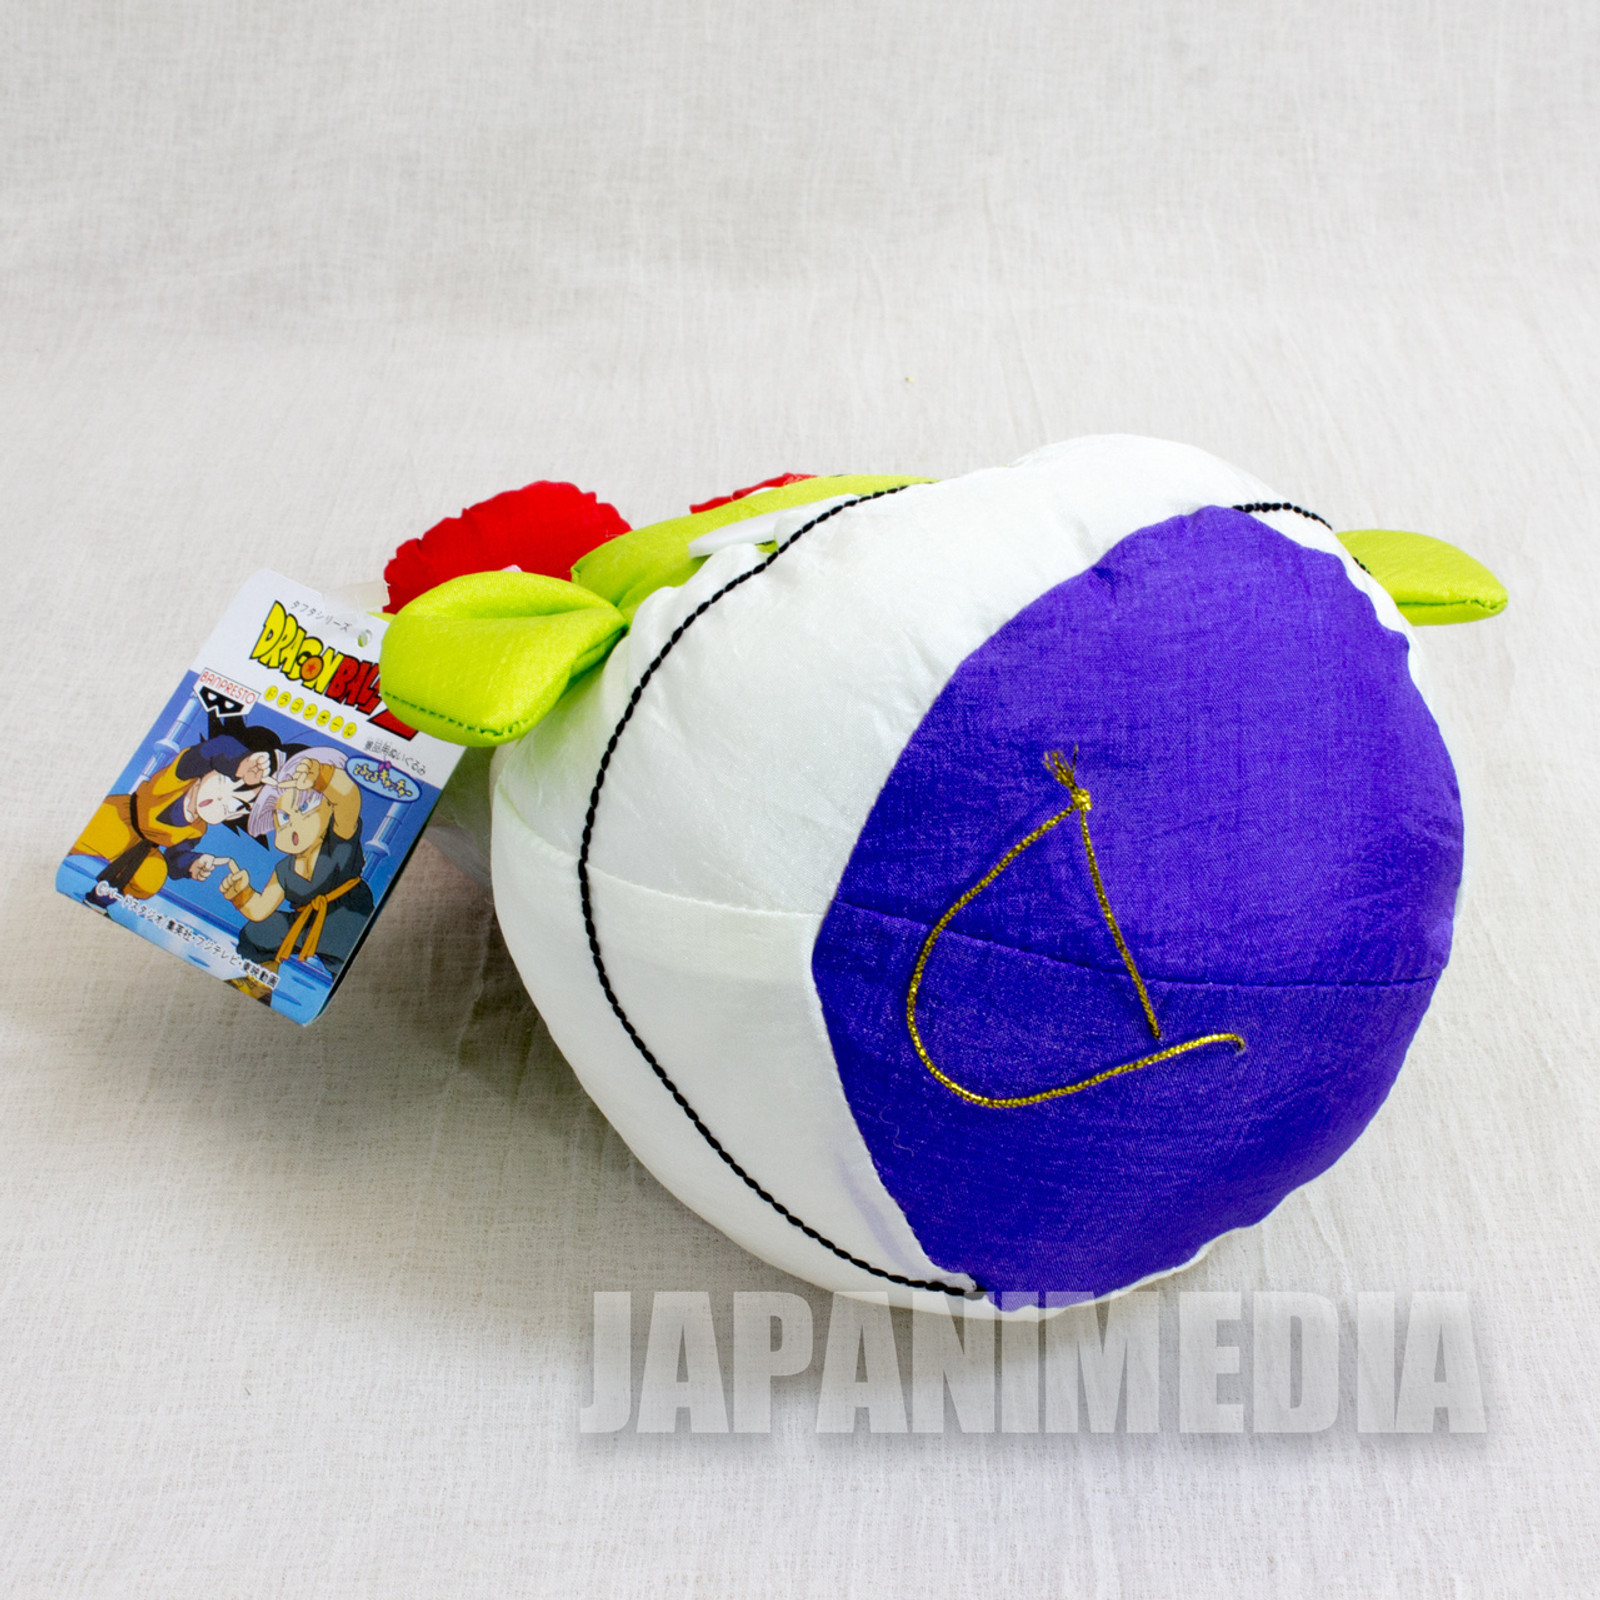 RARE Dragon Ball Z Piccolo 8" Taffeta Plush Doll Figure Banpresto 2007 ANIME MANGA